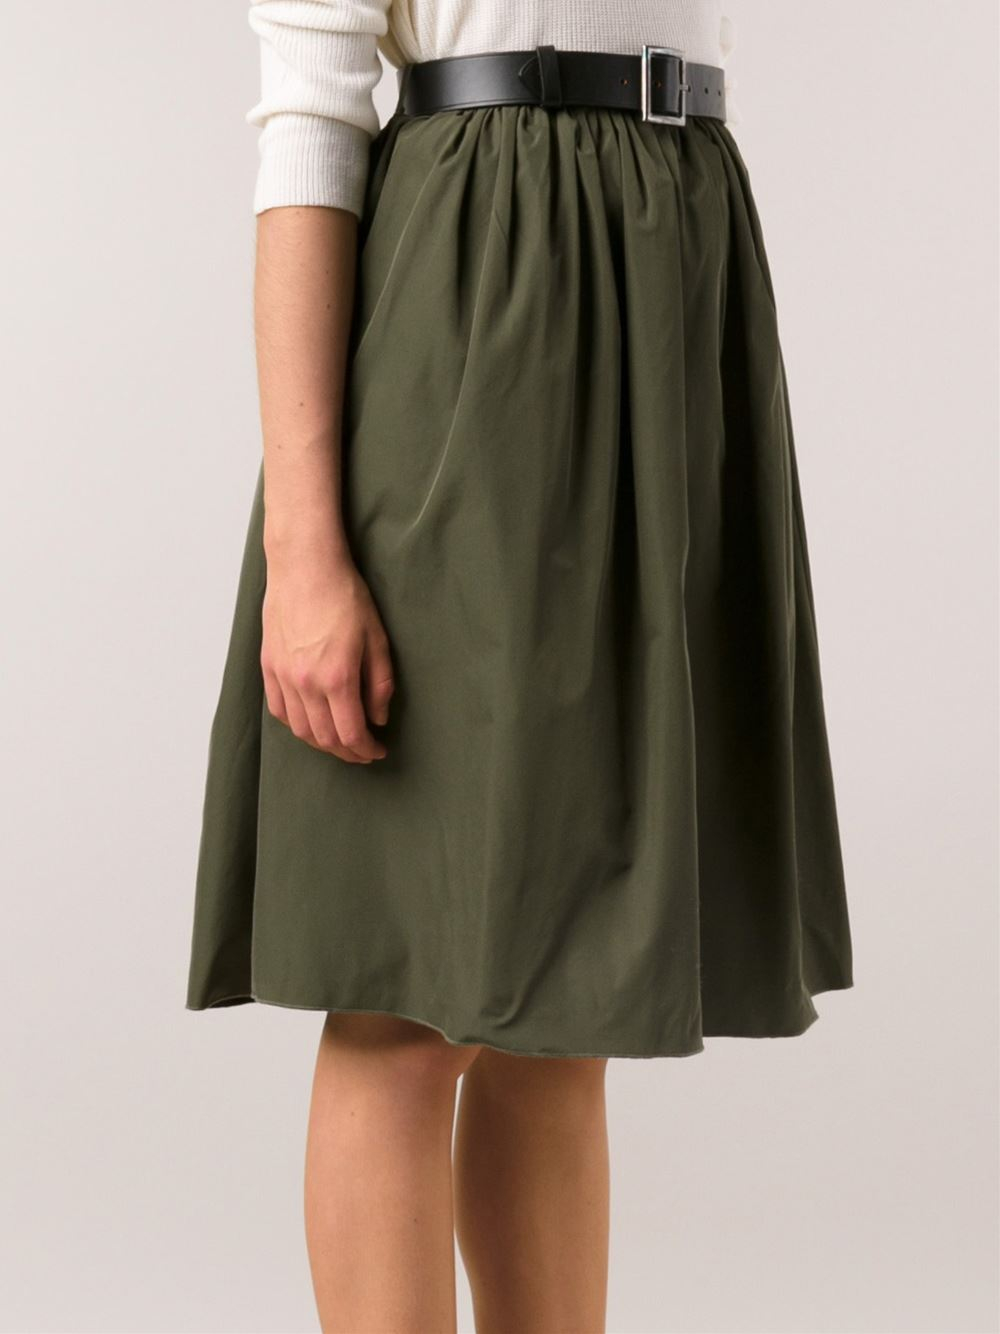 Golden Goose Deluxe Brand Pleated Skirt in Green - Lyst